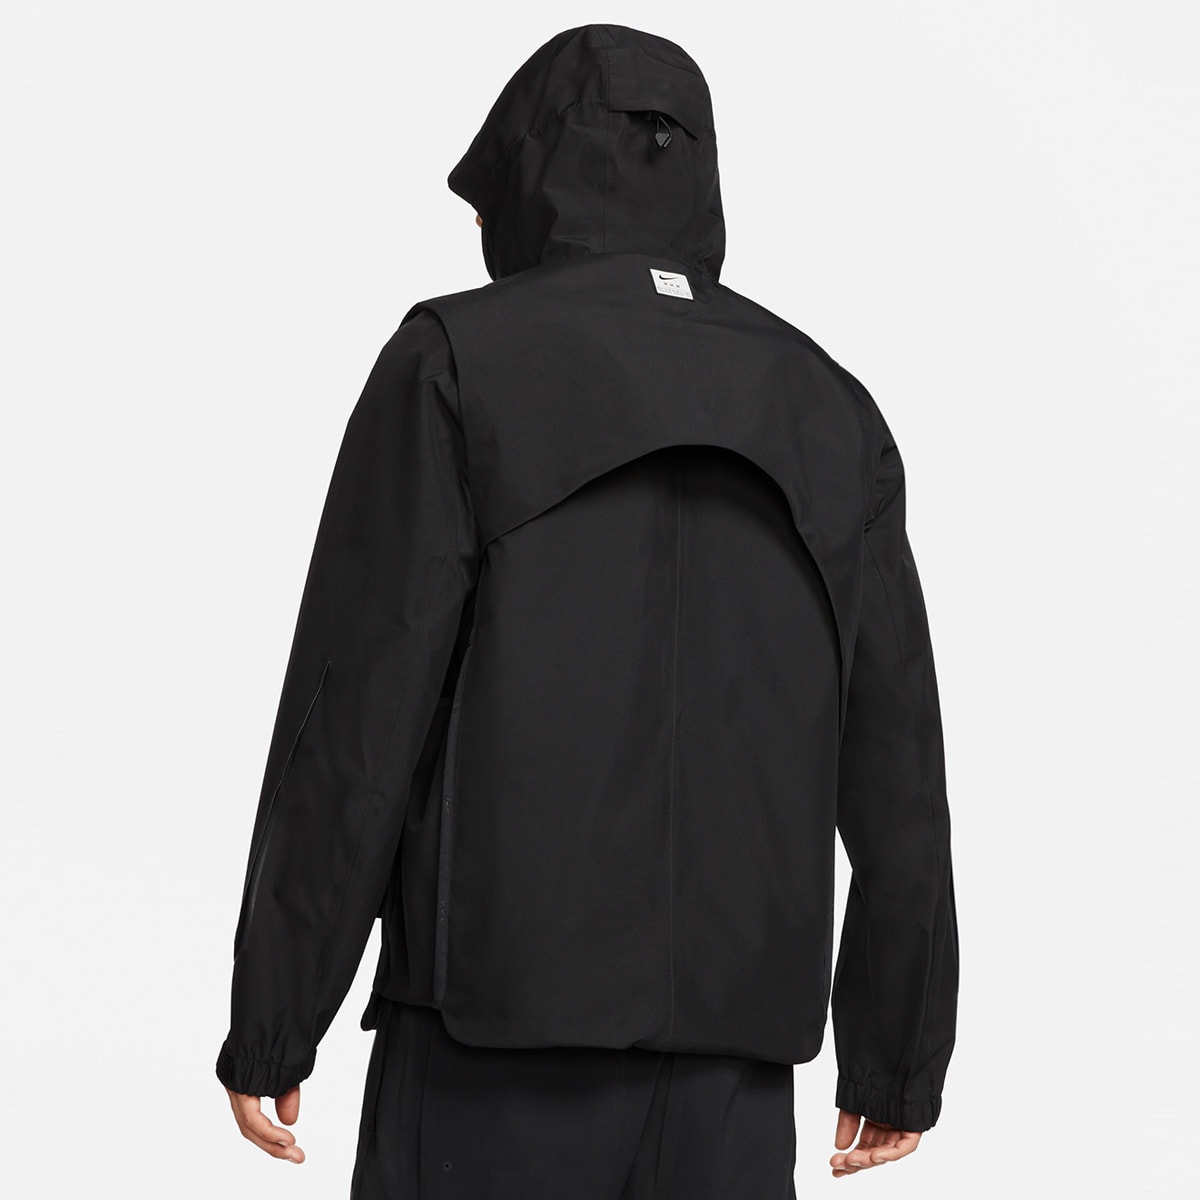 Nike x MMW Jacket (Black) | END. Launches